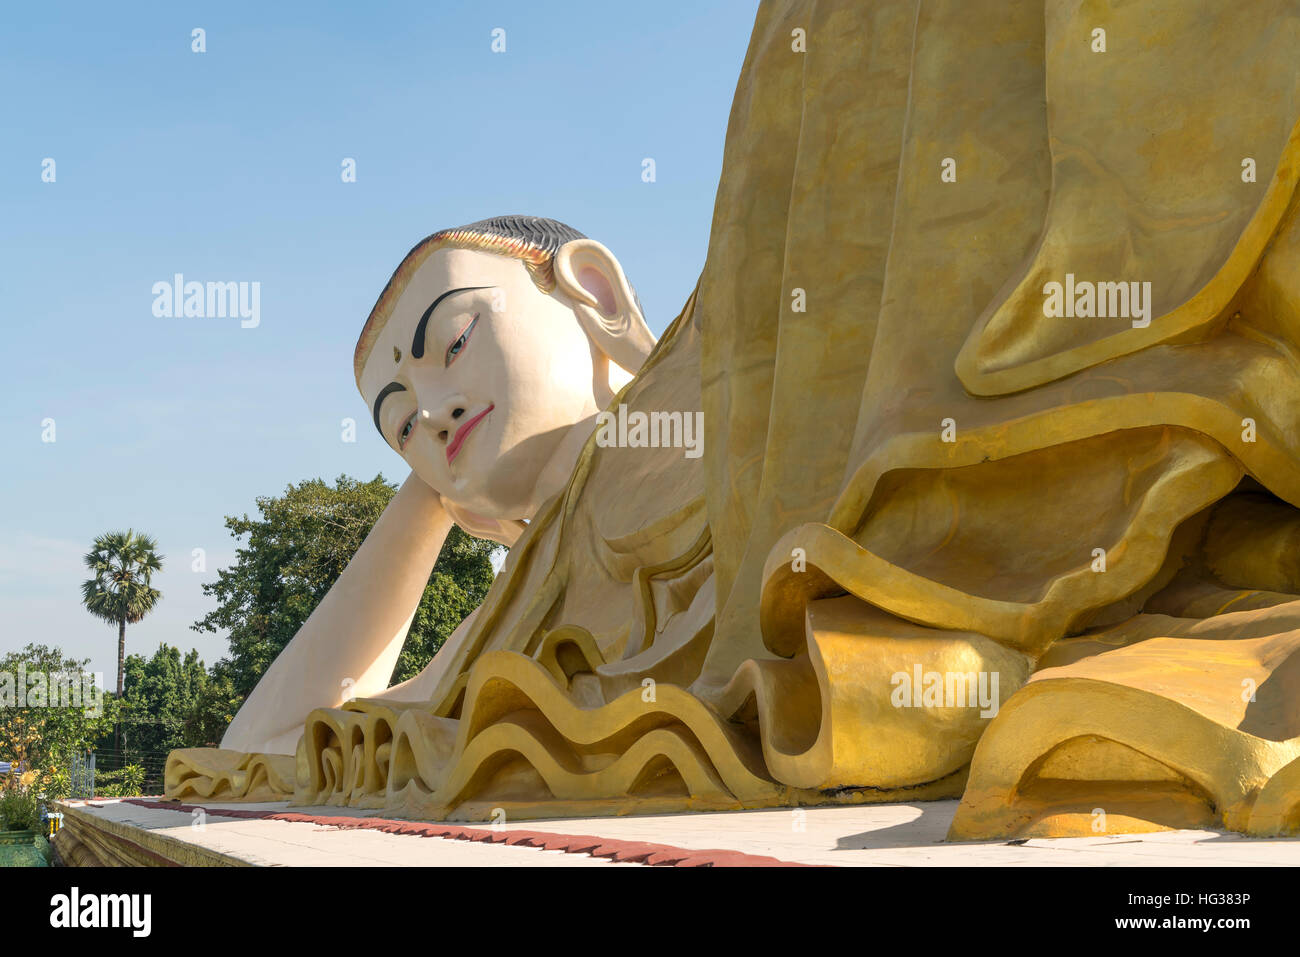 the giant Myatharlyaung Reclining Buddha Image in Bago, Myanmar, Asia Stock Photo